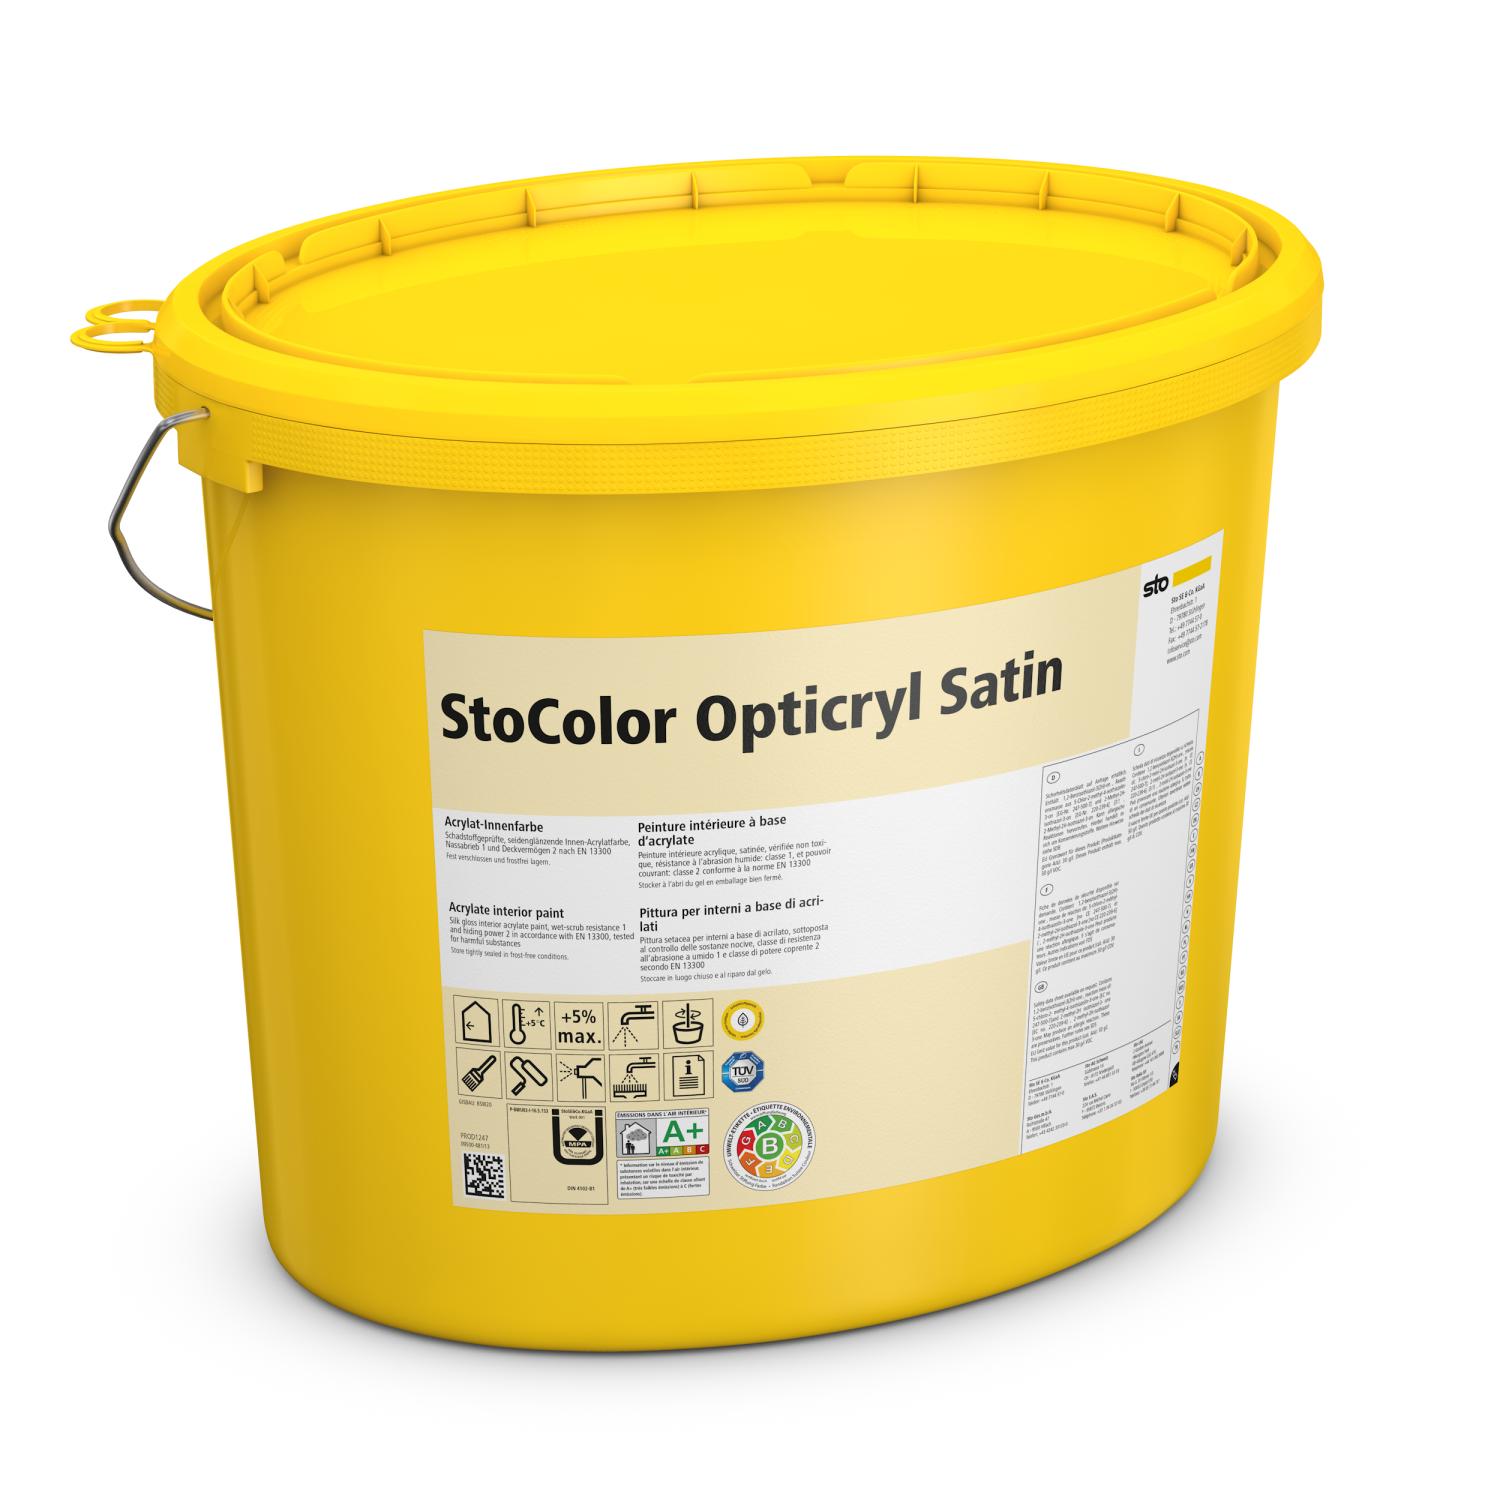 StoColor Opticryl Satin-5 Liter Eimer-Farbtonklasse III 5 Liter